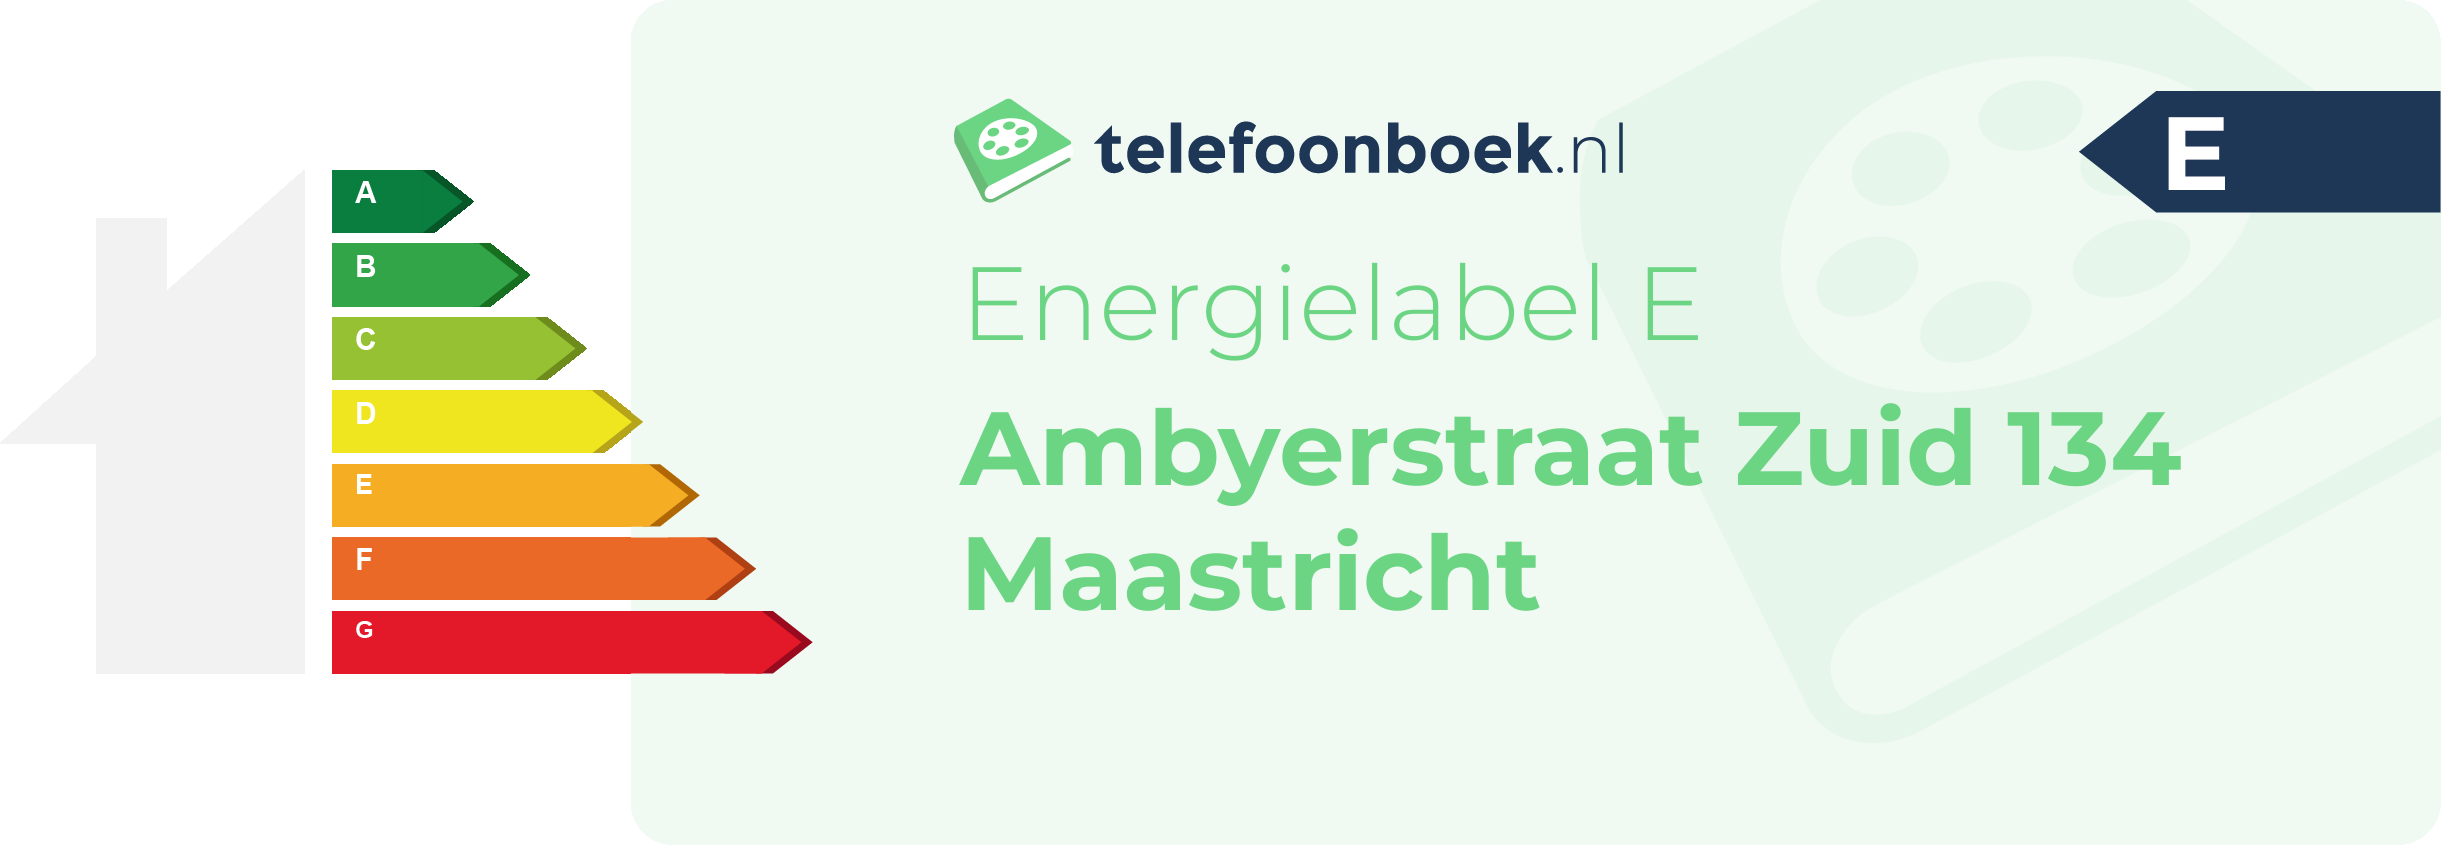 Energielabel Ambyerstraat Zuid 134 Maastricht